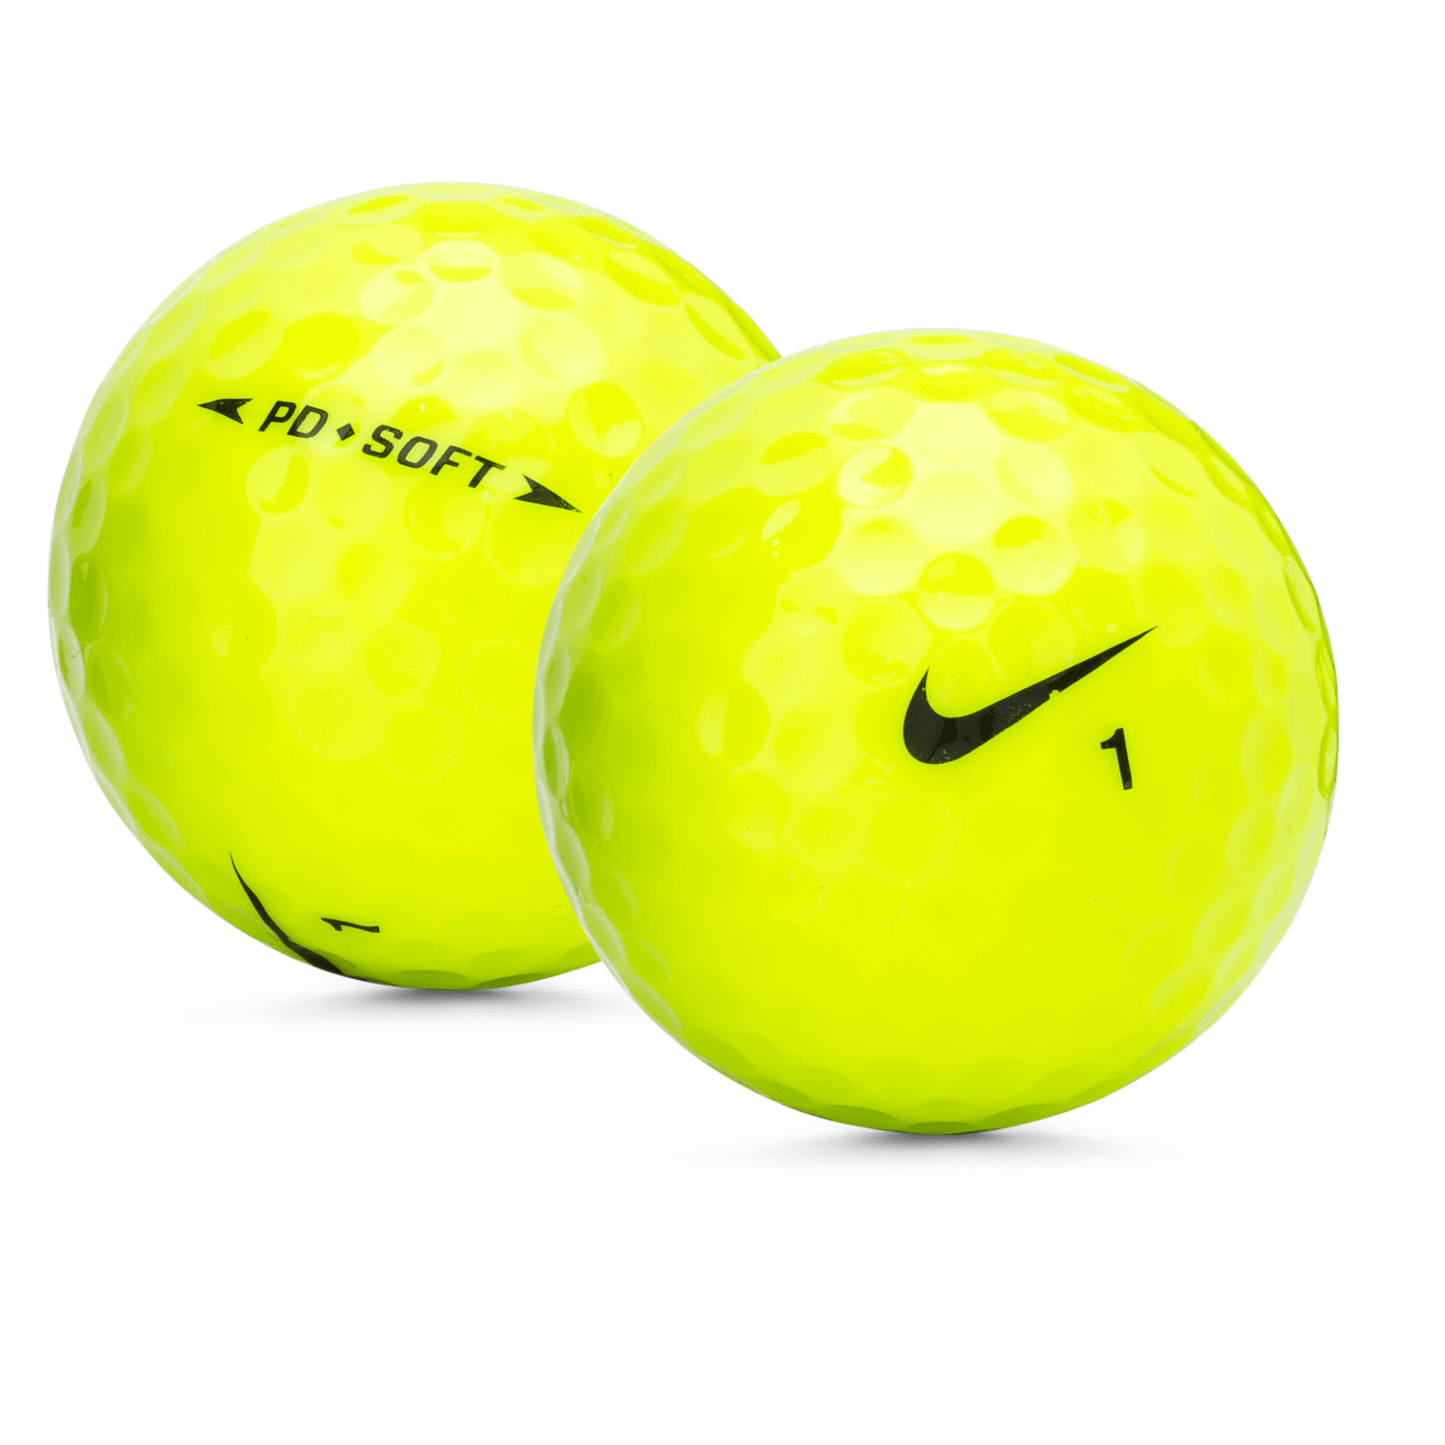 Used Nike PD Soft Yellow Golf Balls - 1 Dozen